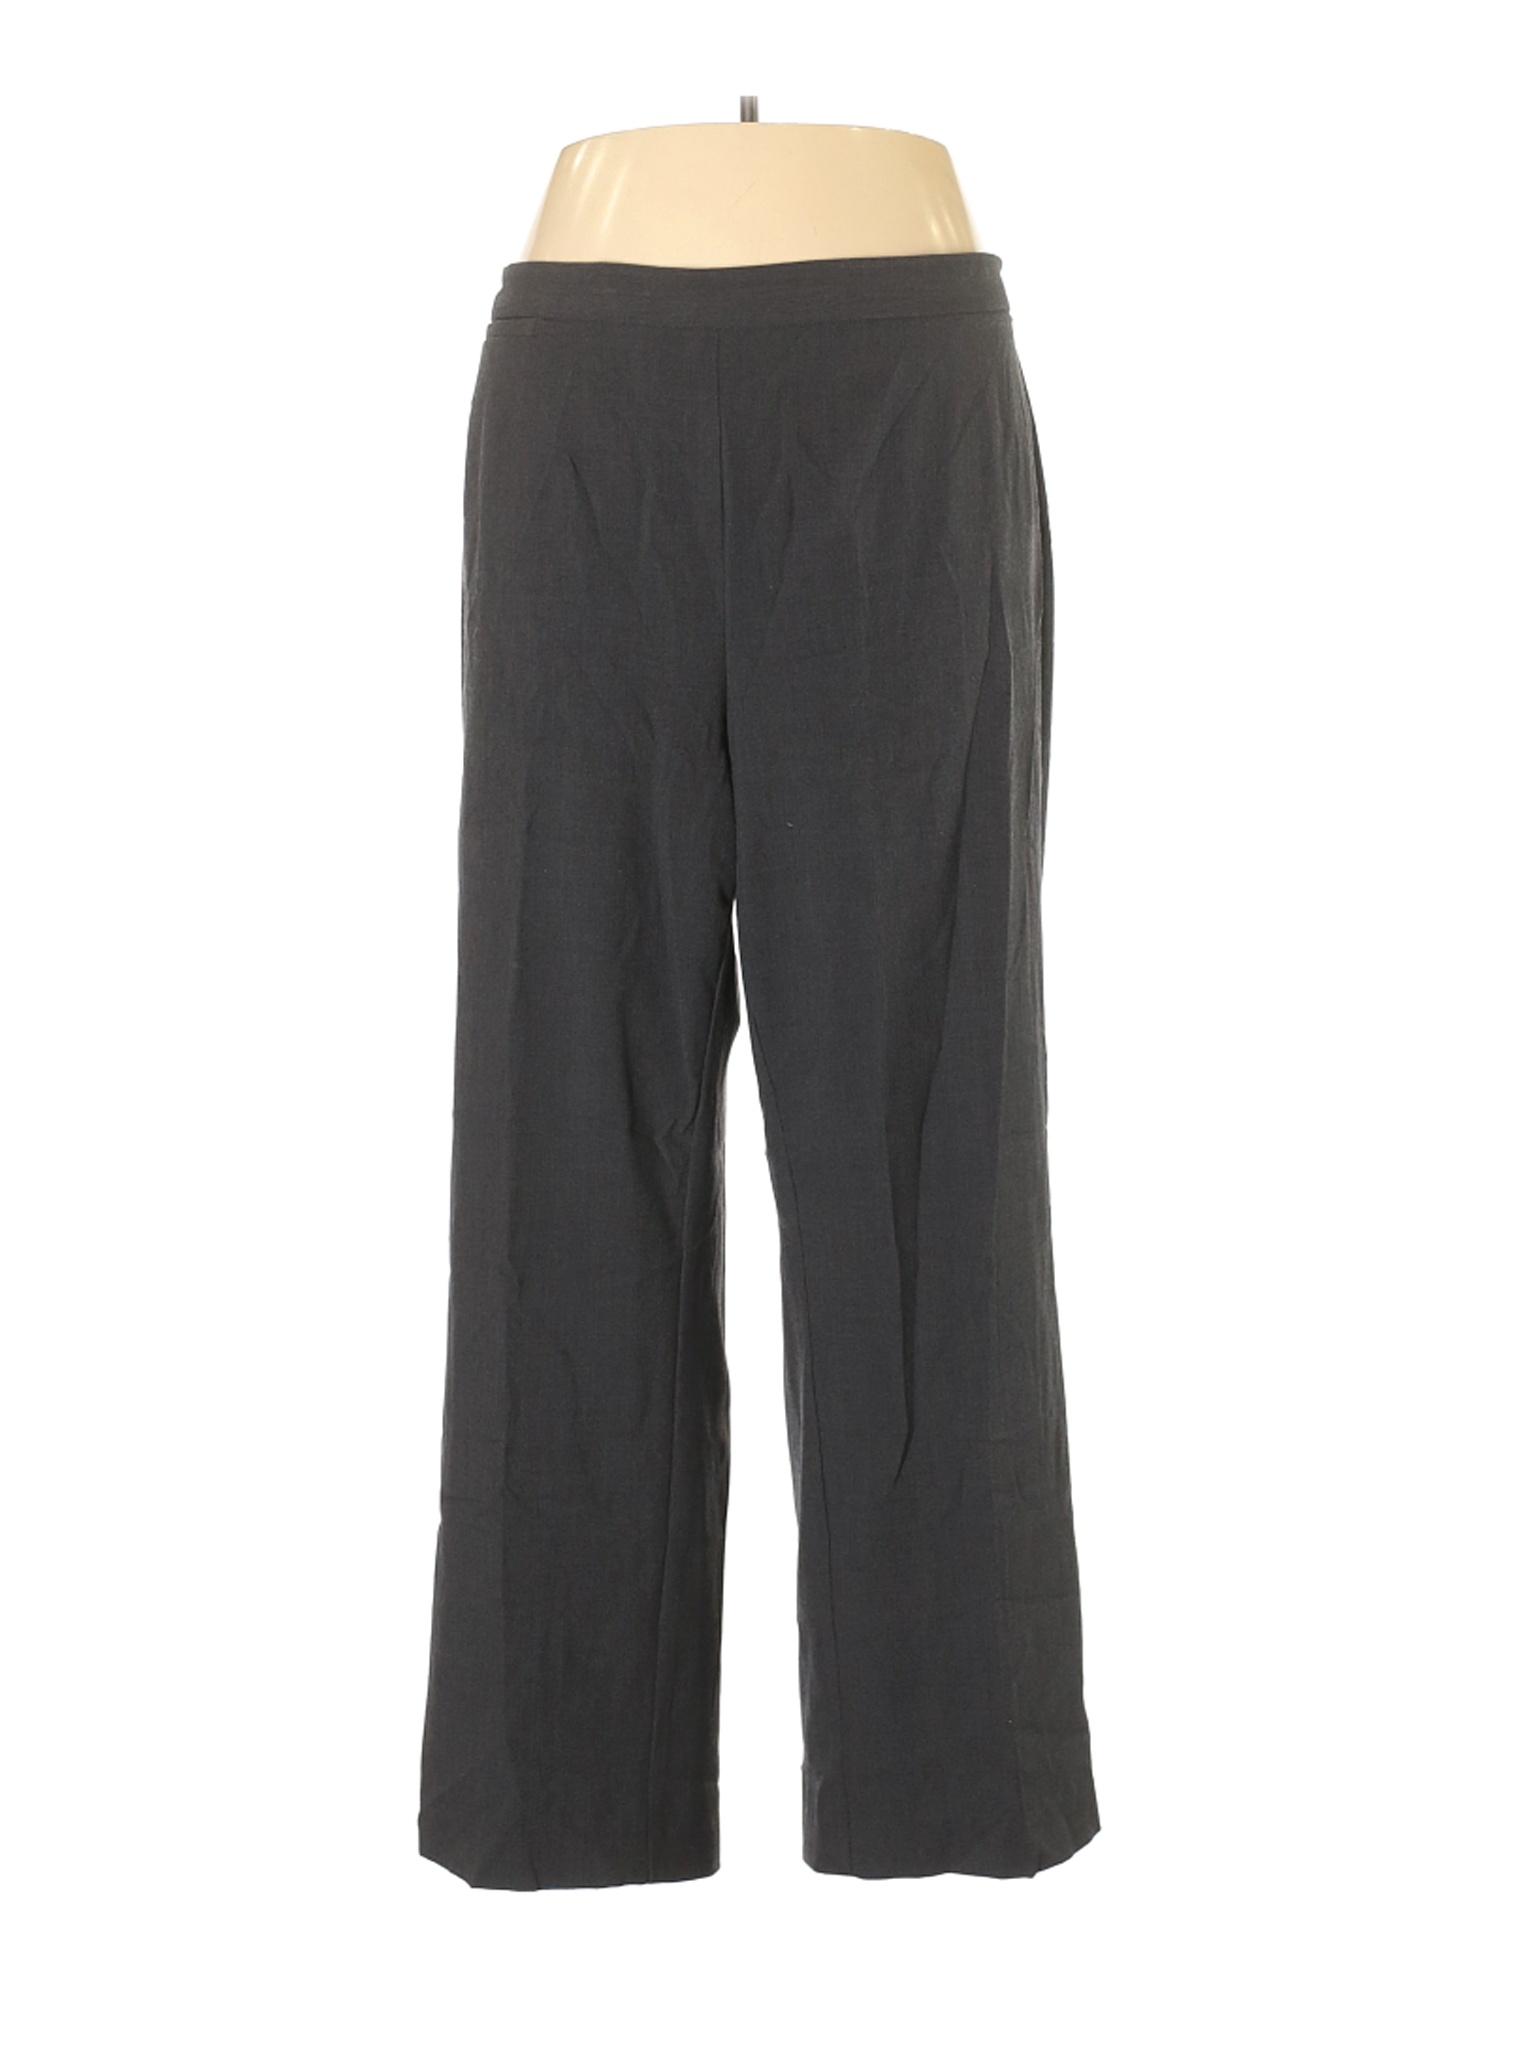 Catherines Women Gray Dress Pants 1X Plus | eBay